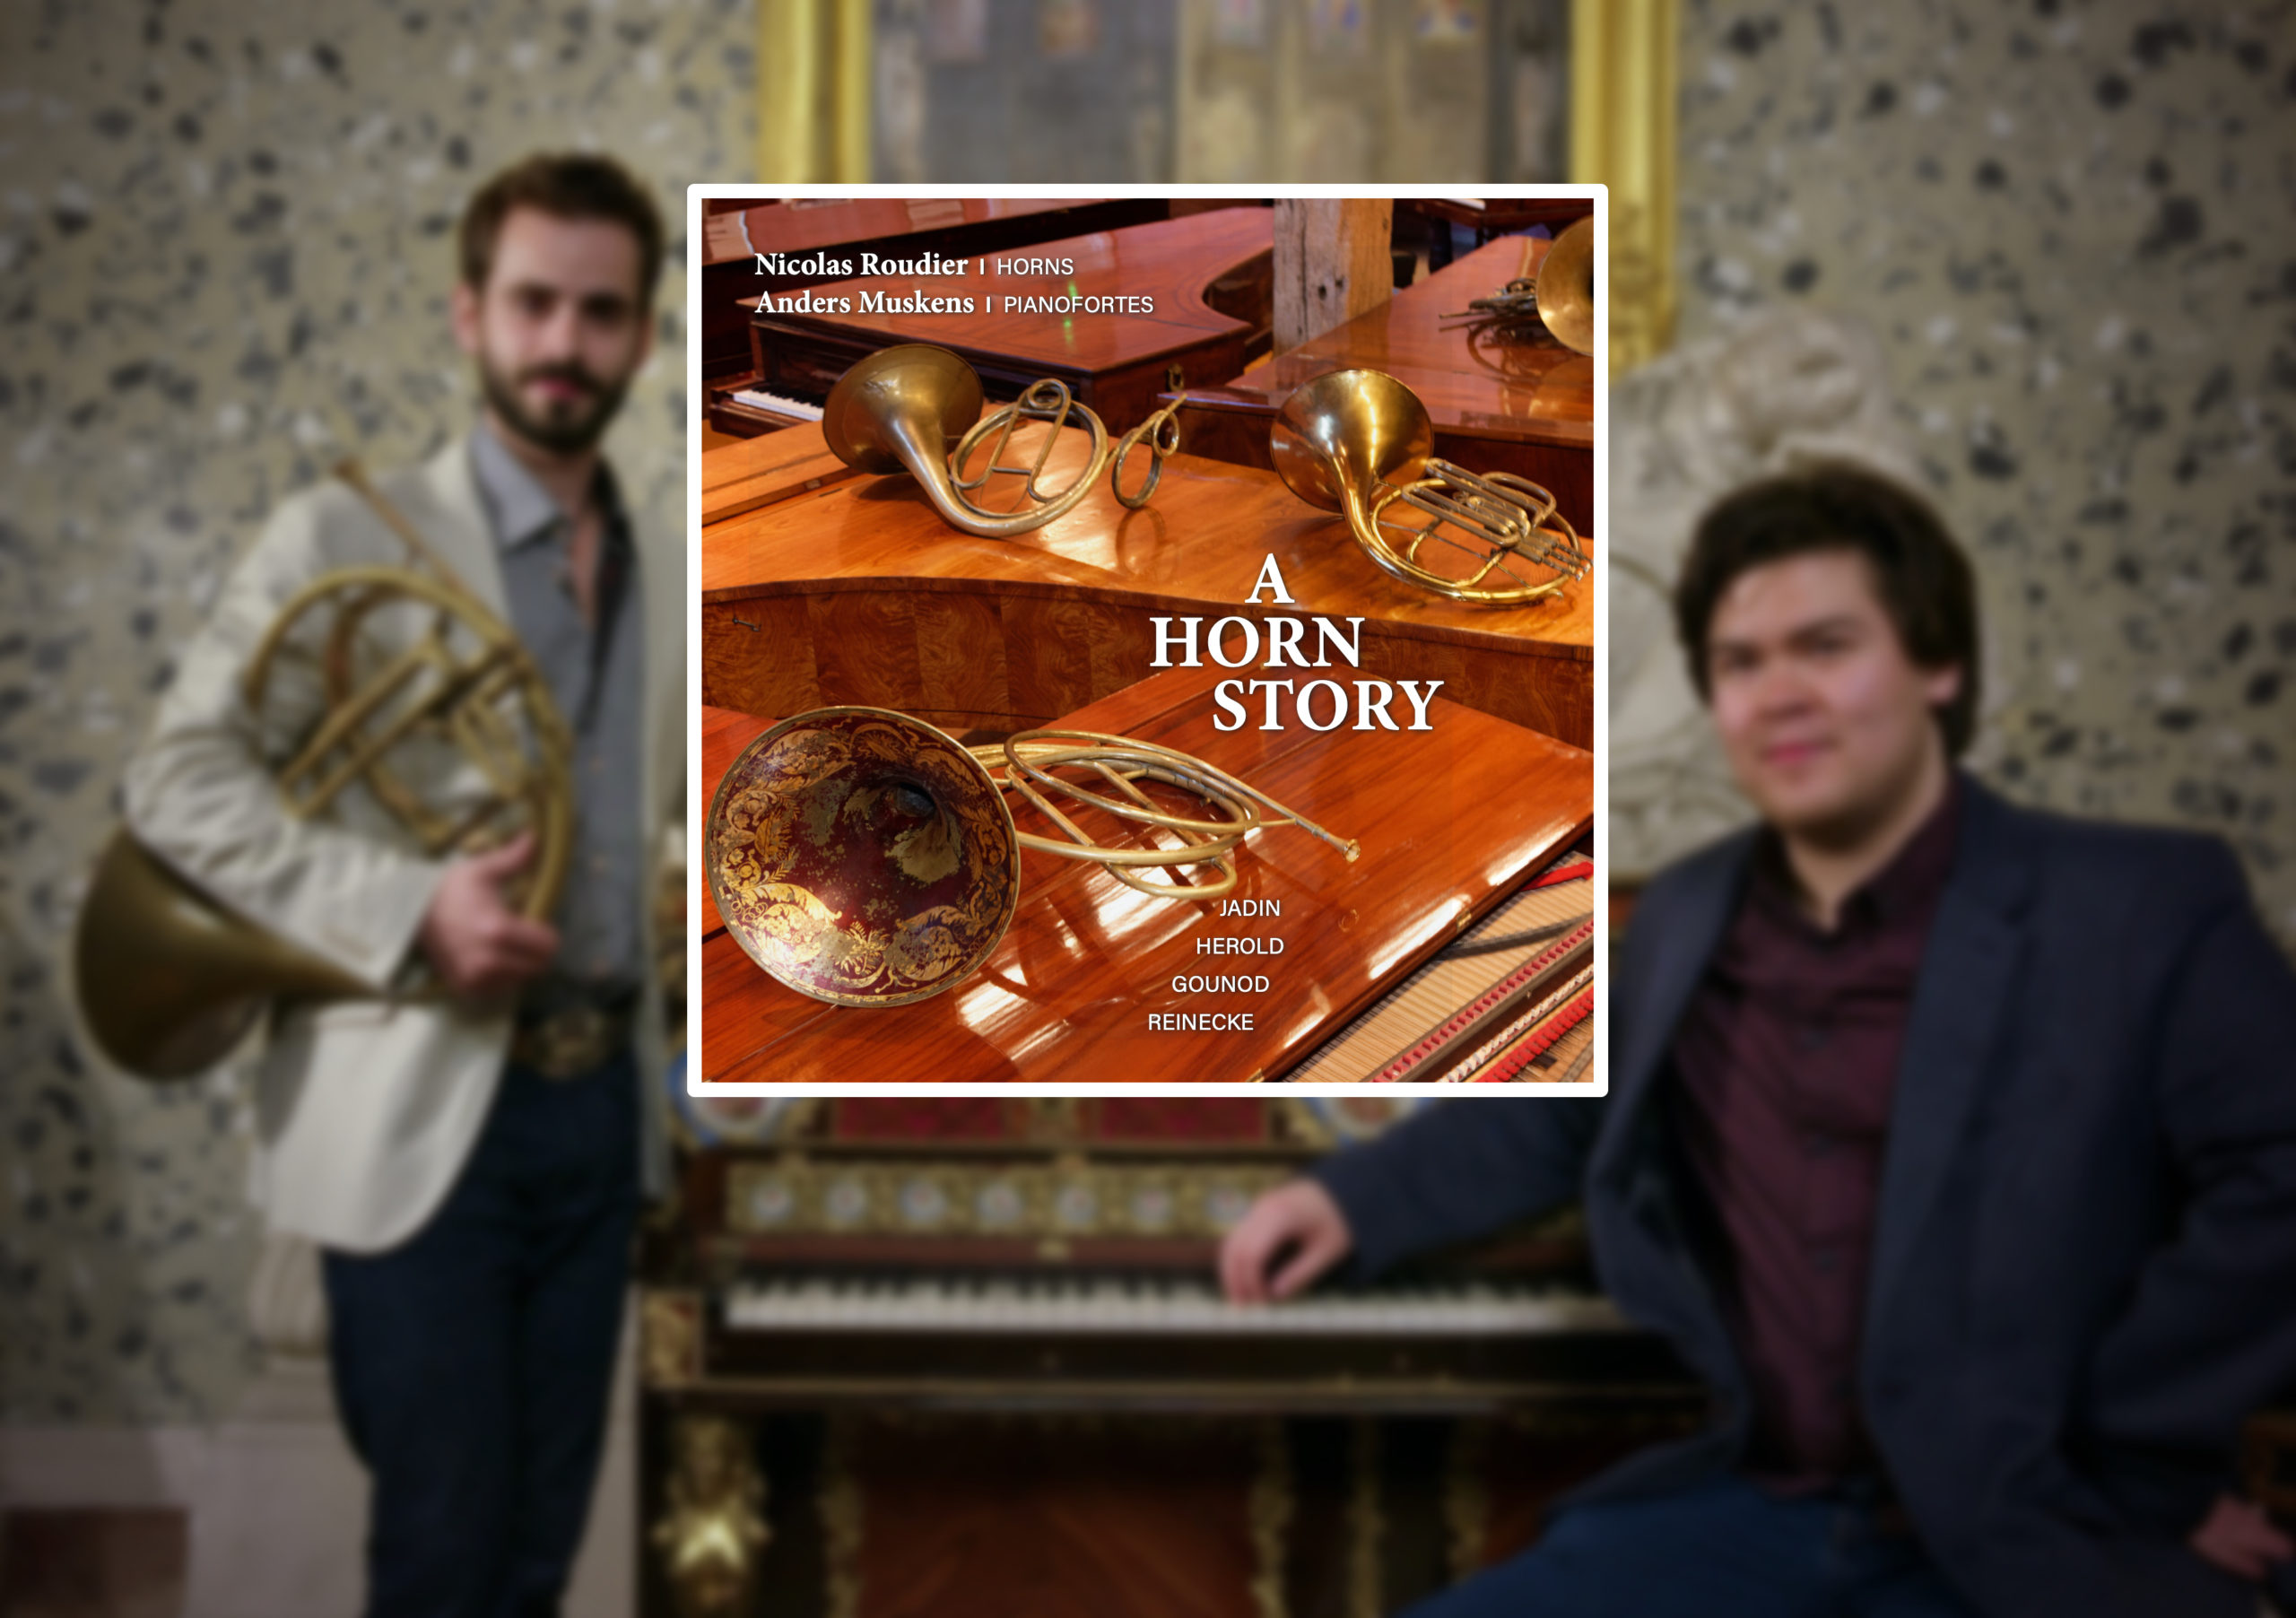 Album : A Horn Story